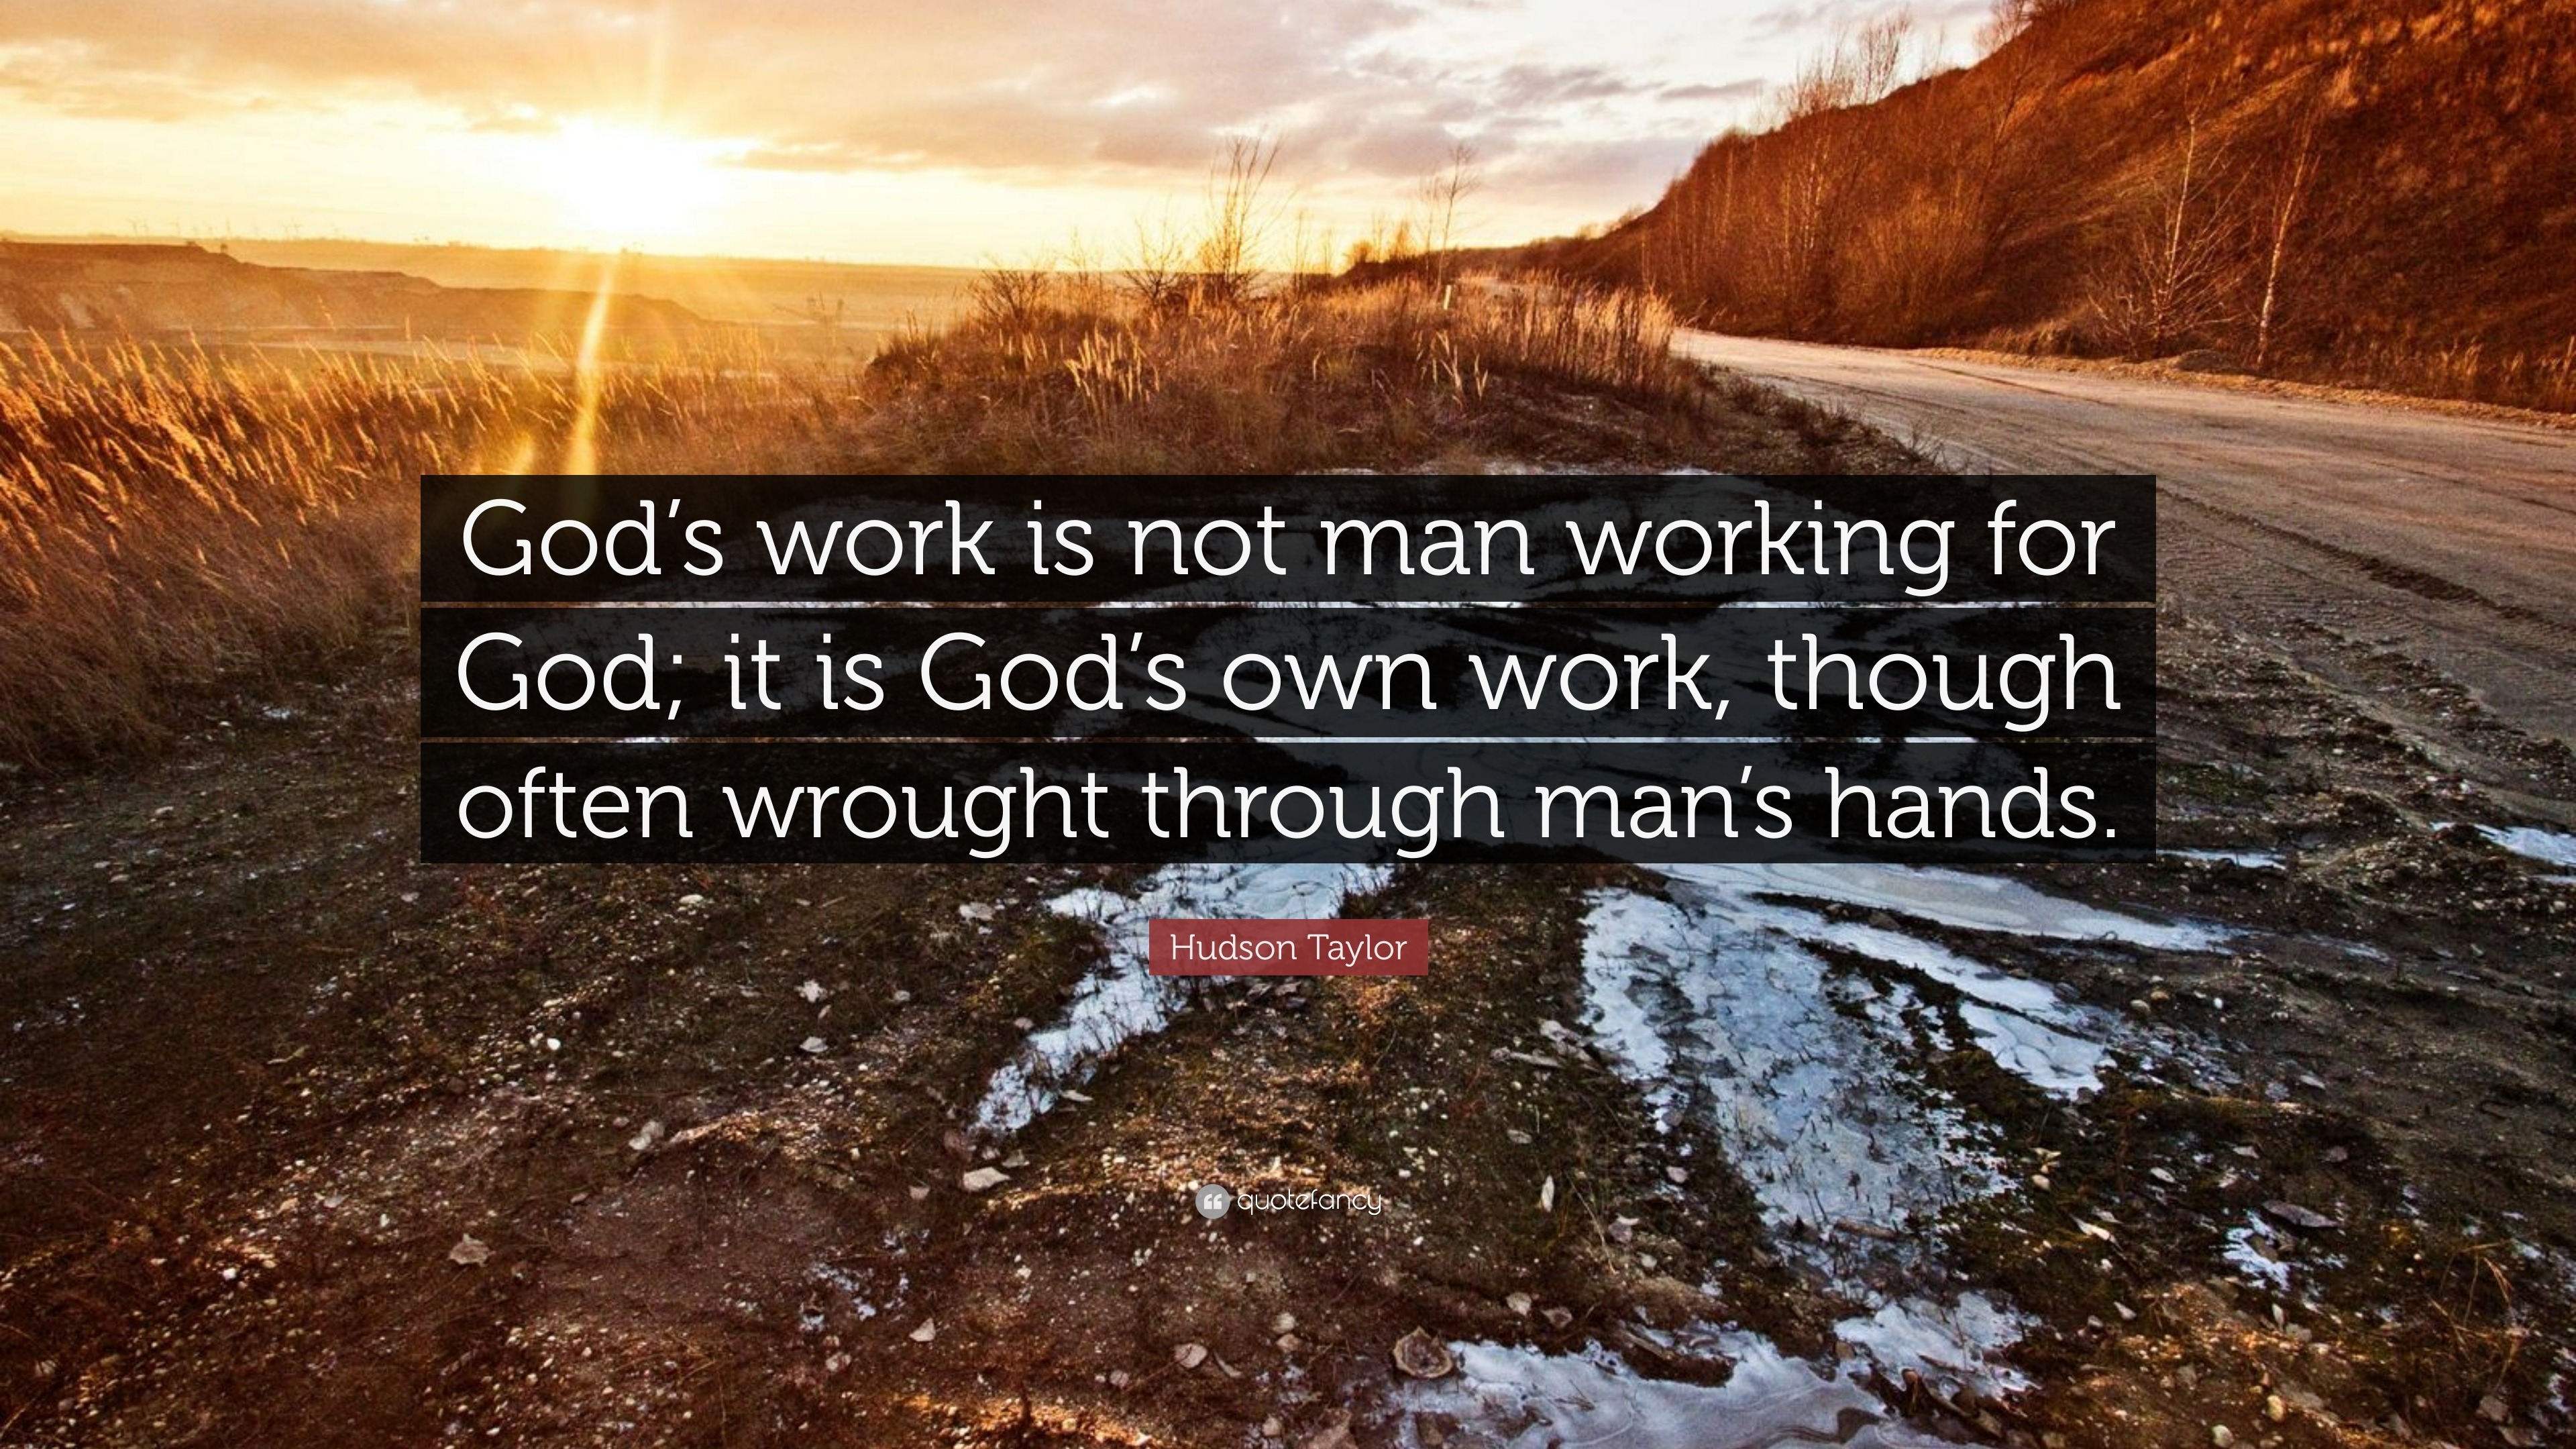 do your work unto god not man